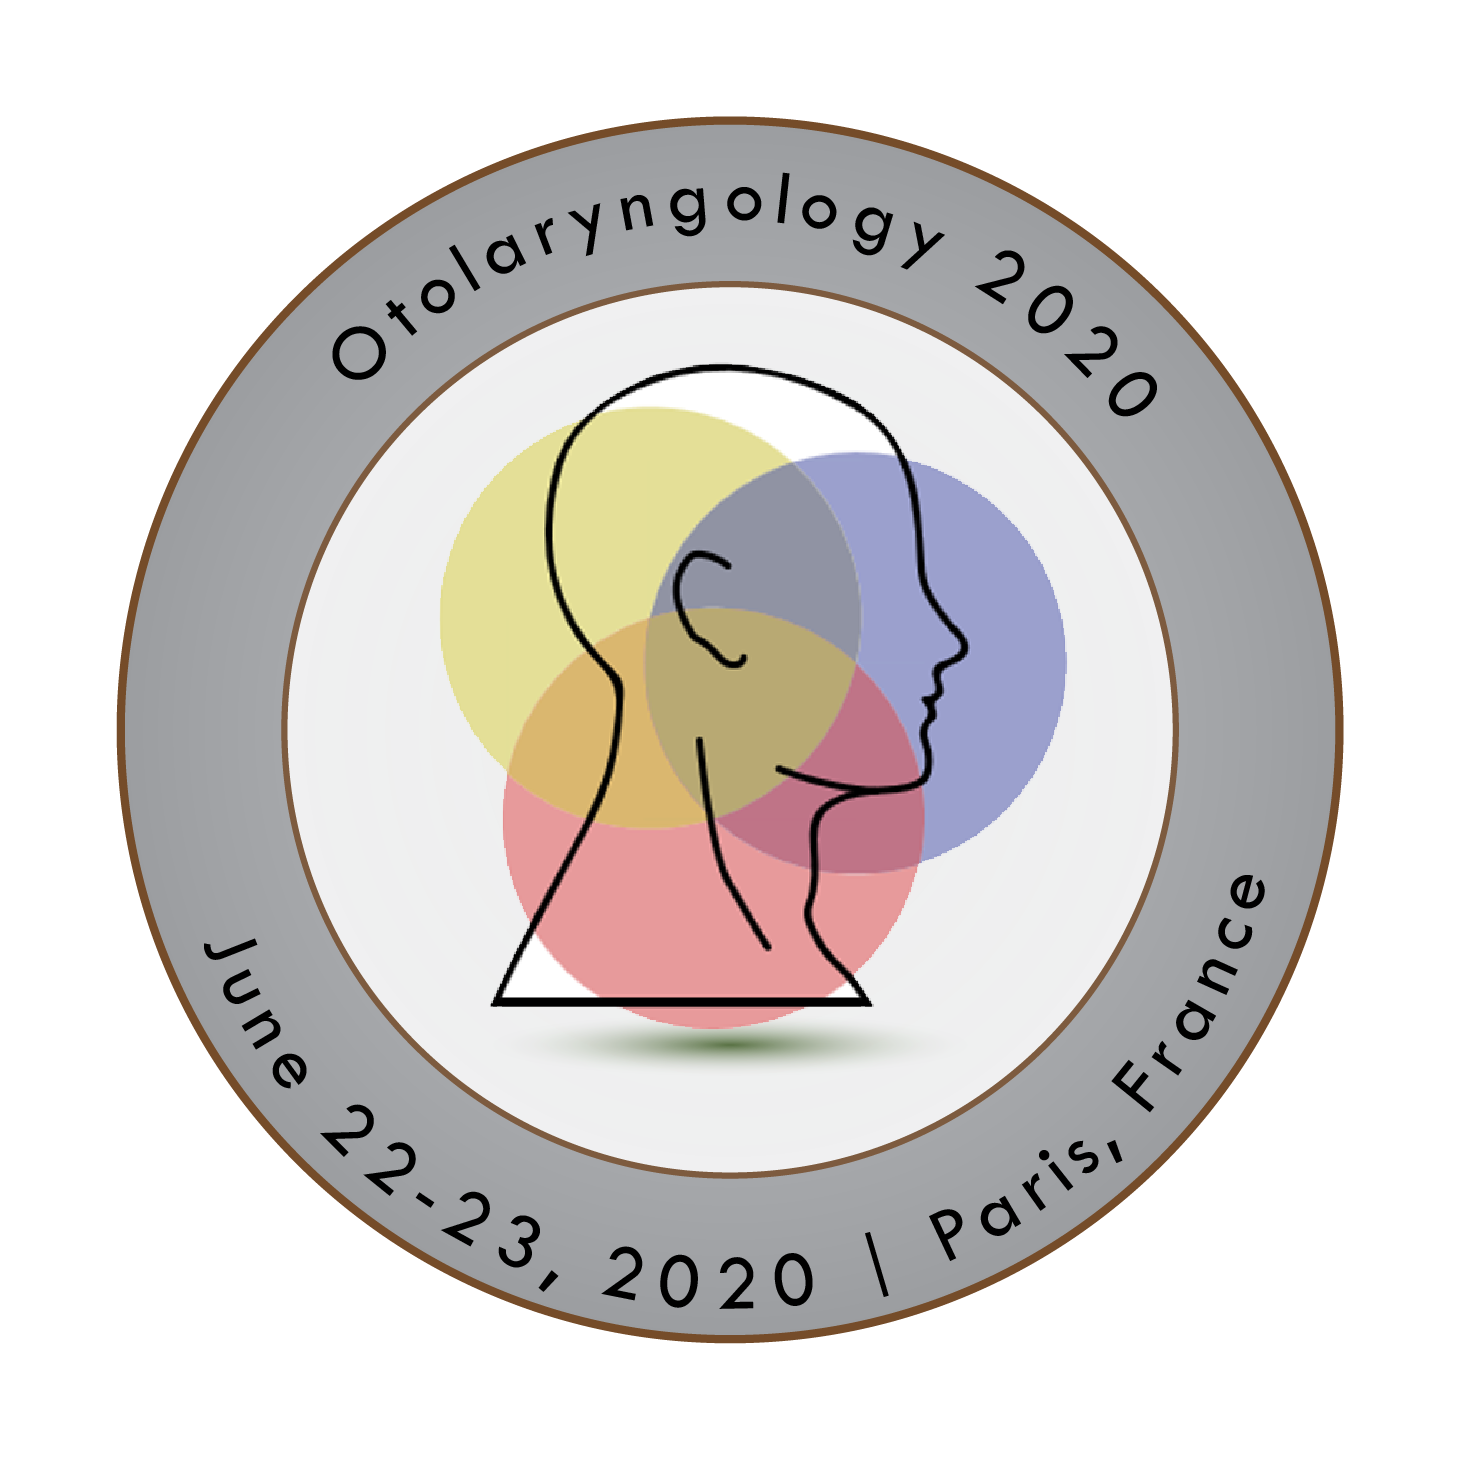 10th International Conference on Otolaryngology